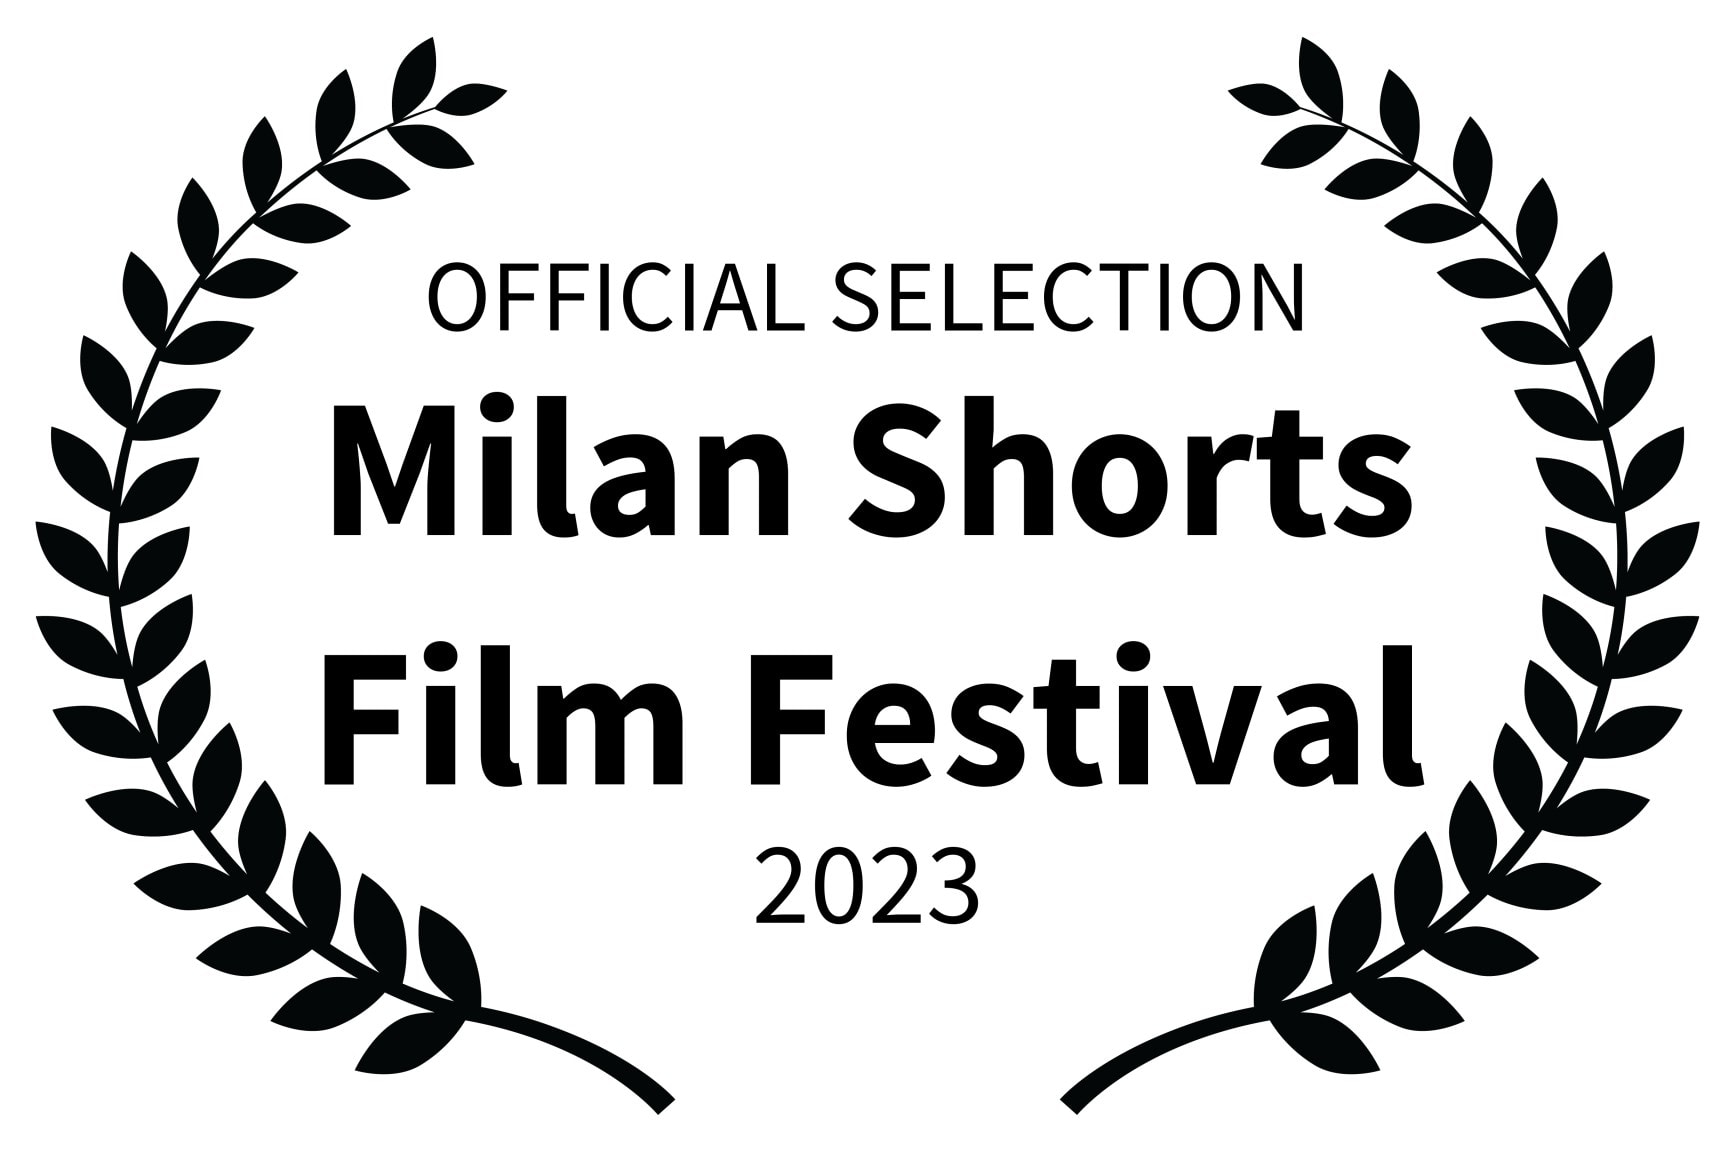 OFFICIAL SELECTION - Milan Shorts Film Festival - 2023